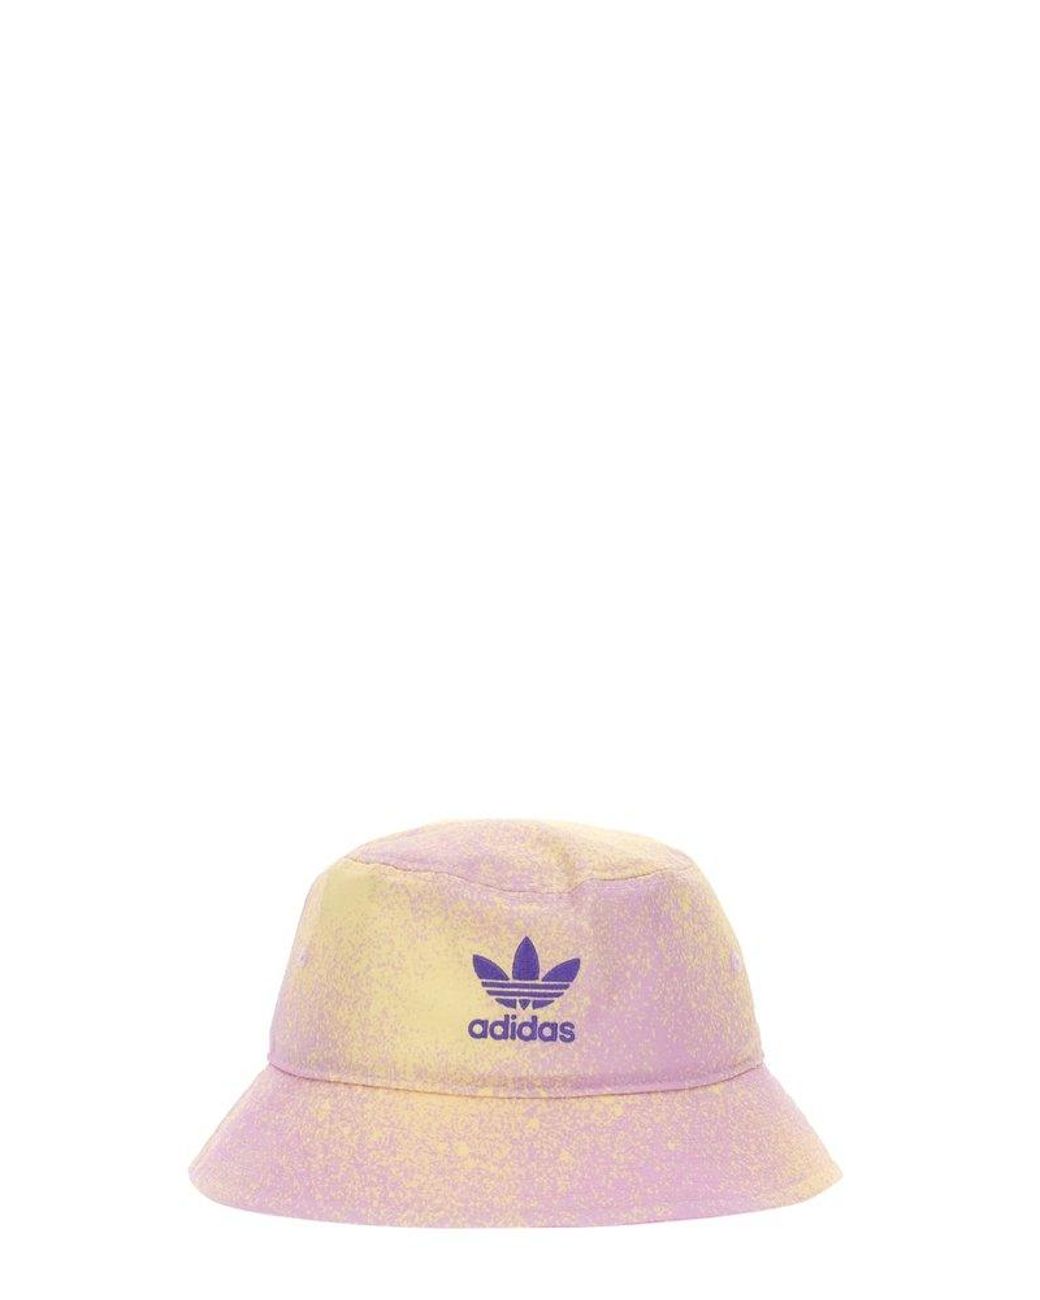 adidas Originals Cotton Bucket Hat With Logo in Pink - Save 31% | Lyst  Canada